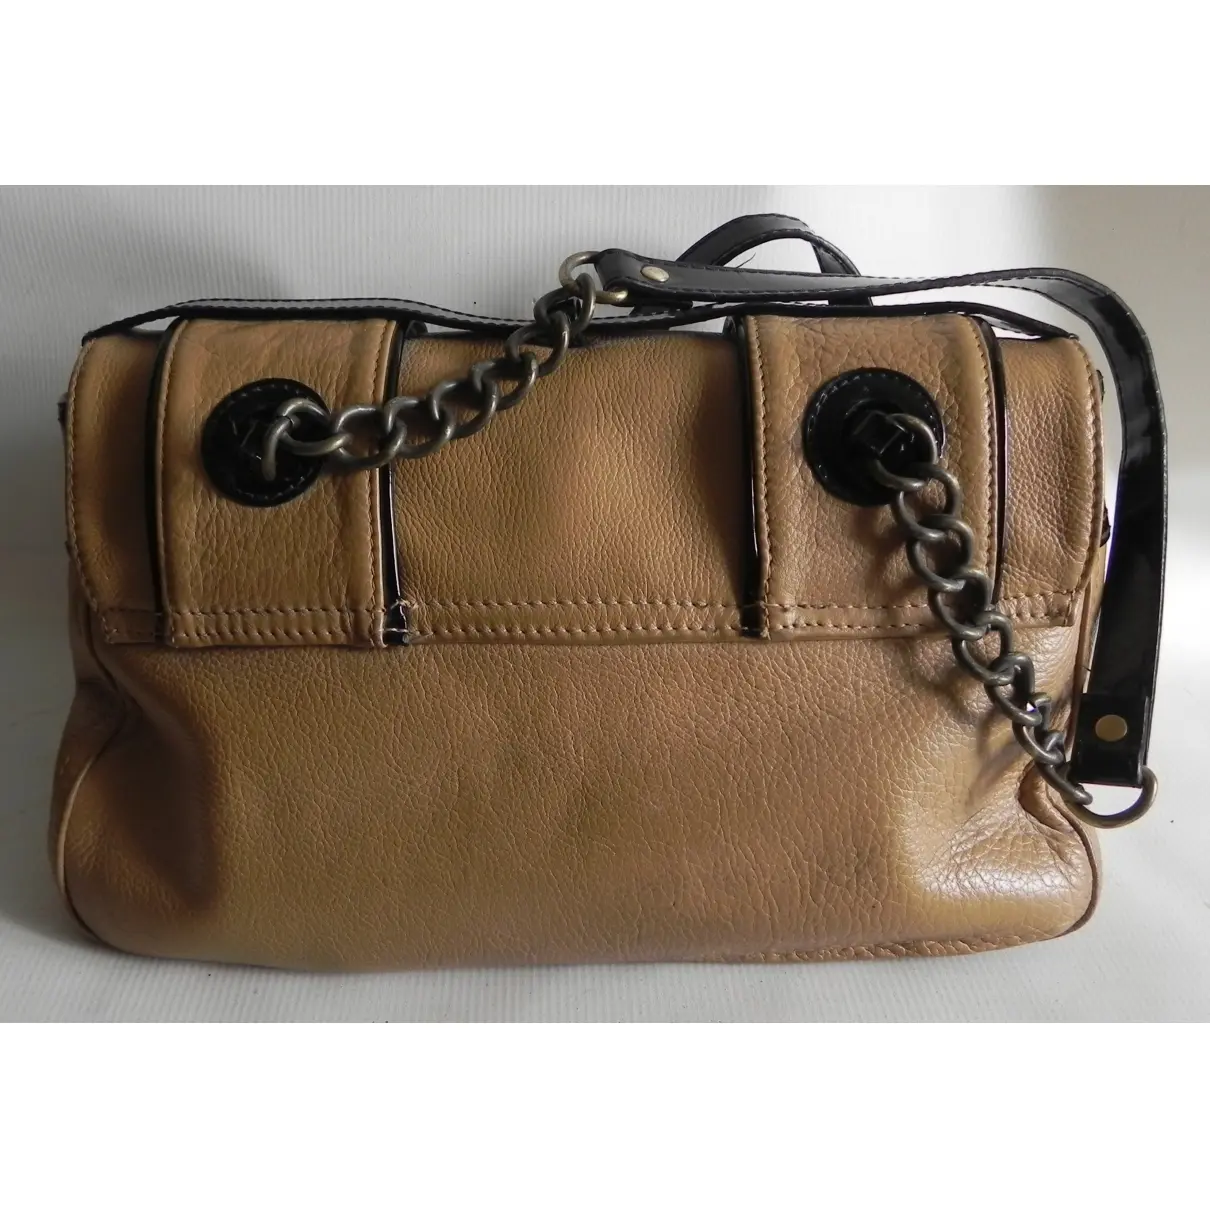 Buy Fendi Bag leather handbag online